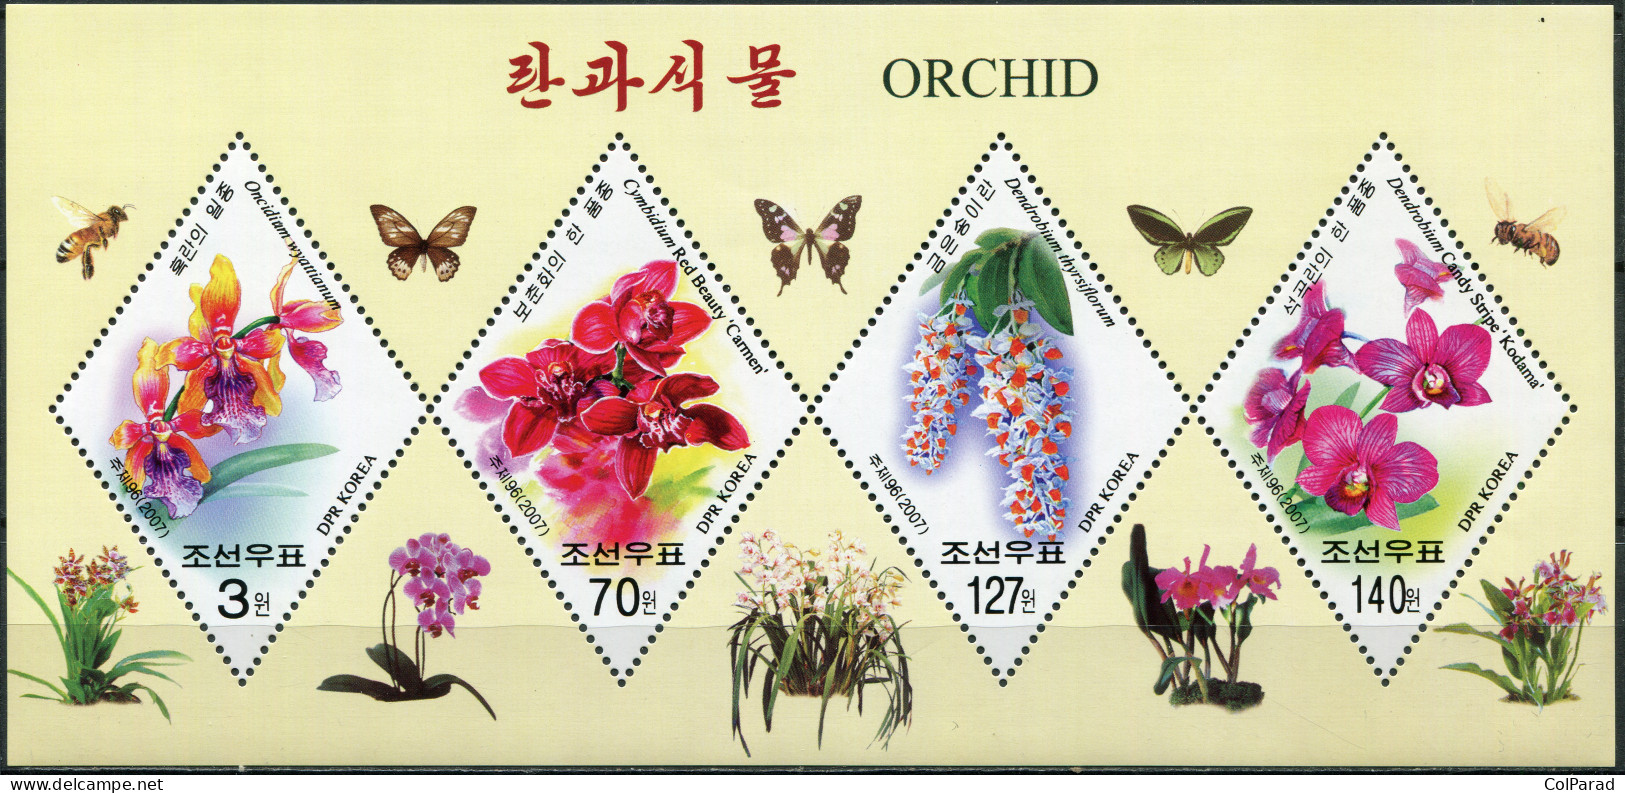 NORTH KOREA - 2007 - MINIATURE SHEET MNH ** - Orchids - Korea (Nord-)